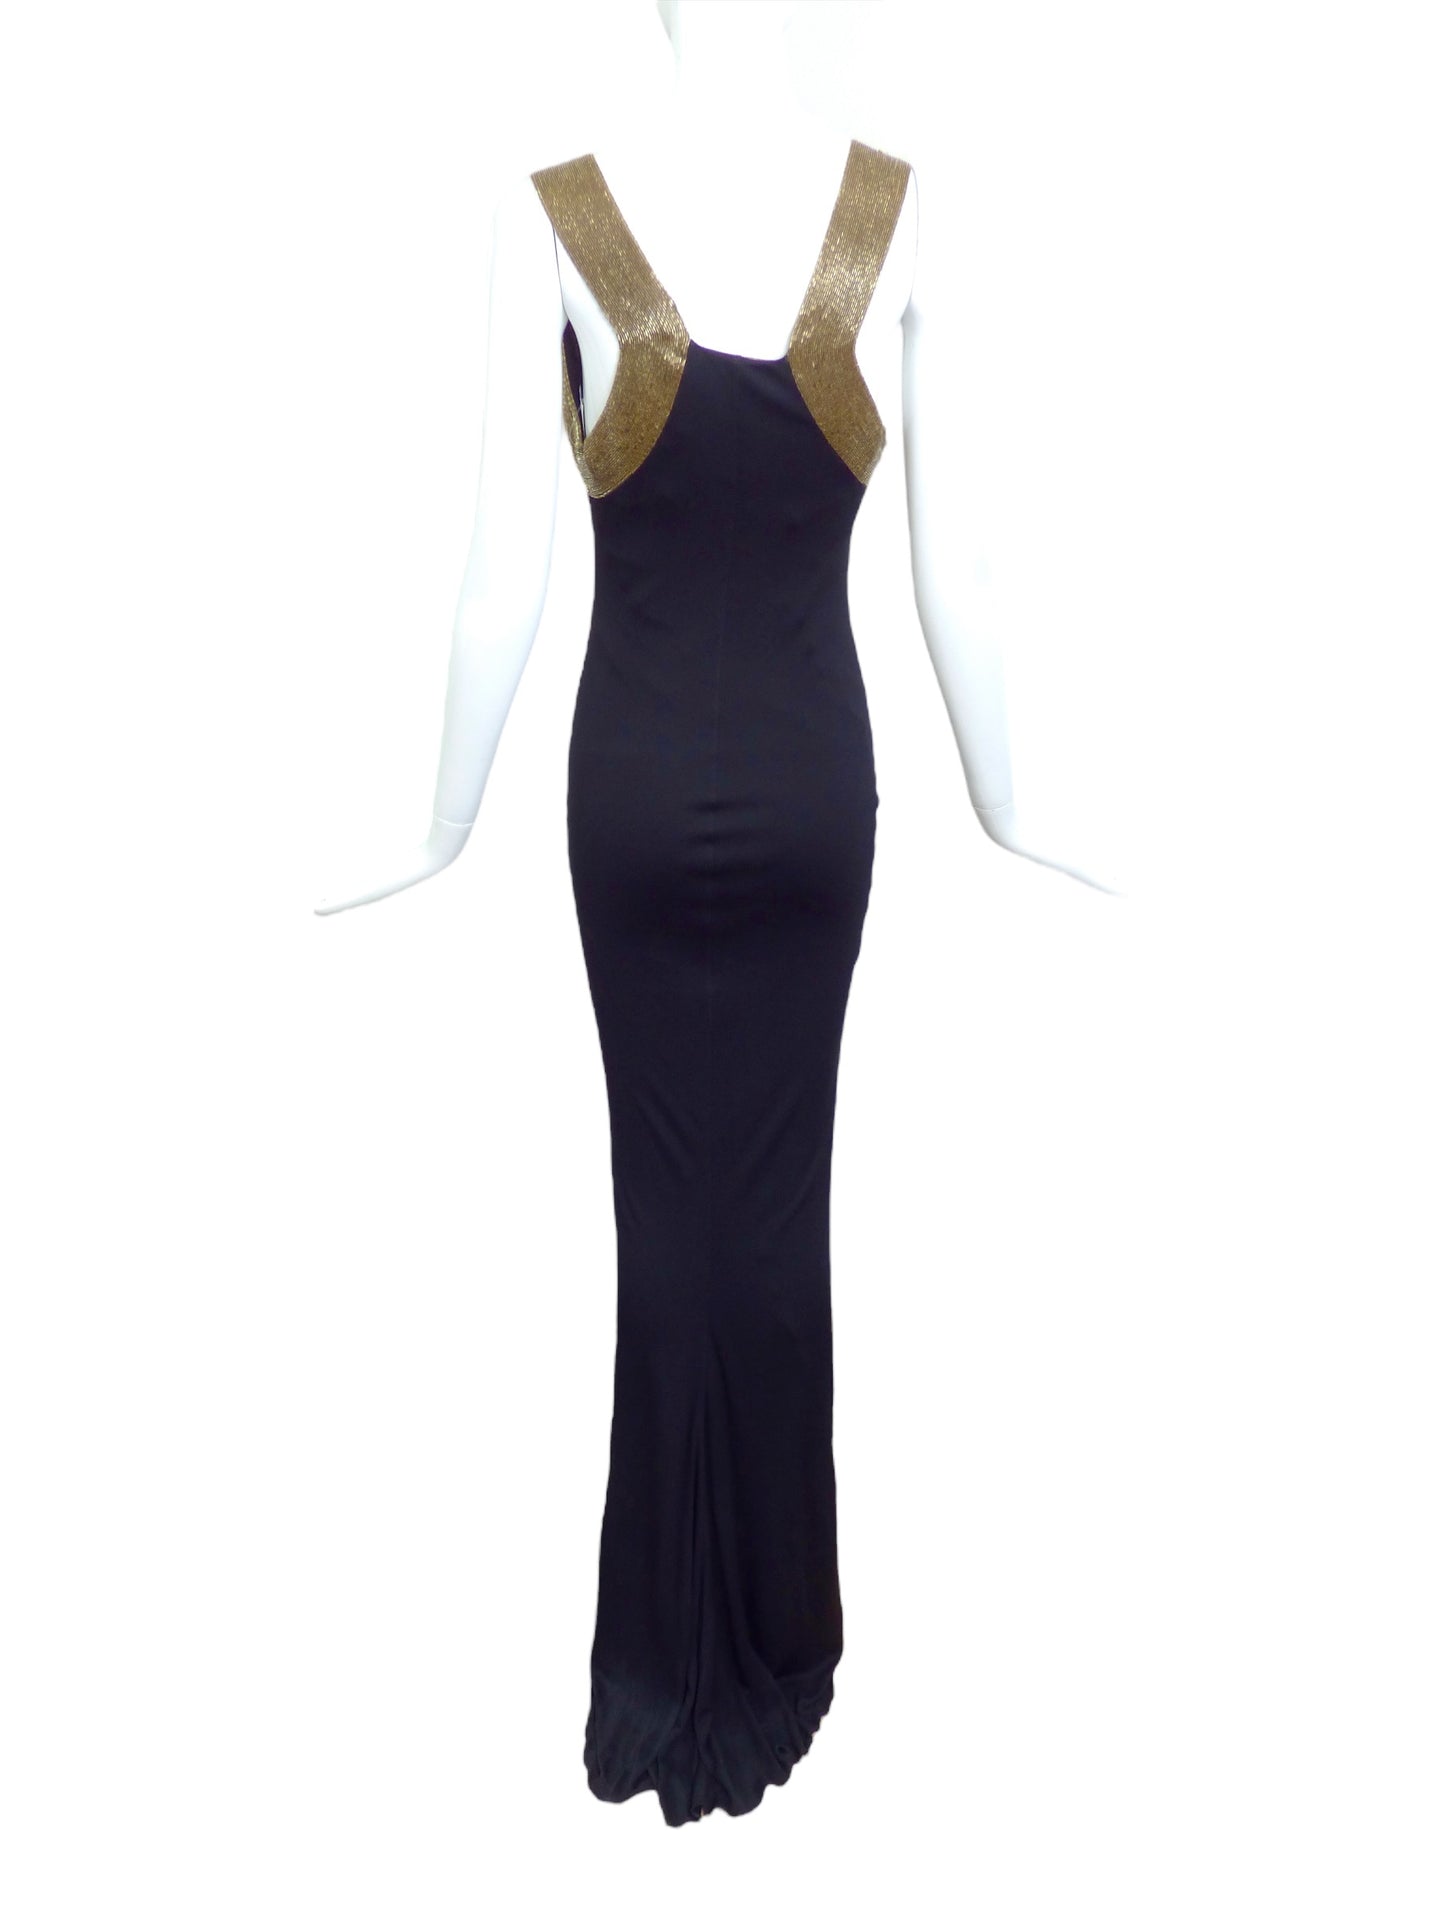 ROBERTO CAVALLI- Beaded Crepe Evening Gown, Size 6